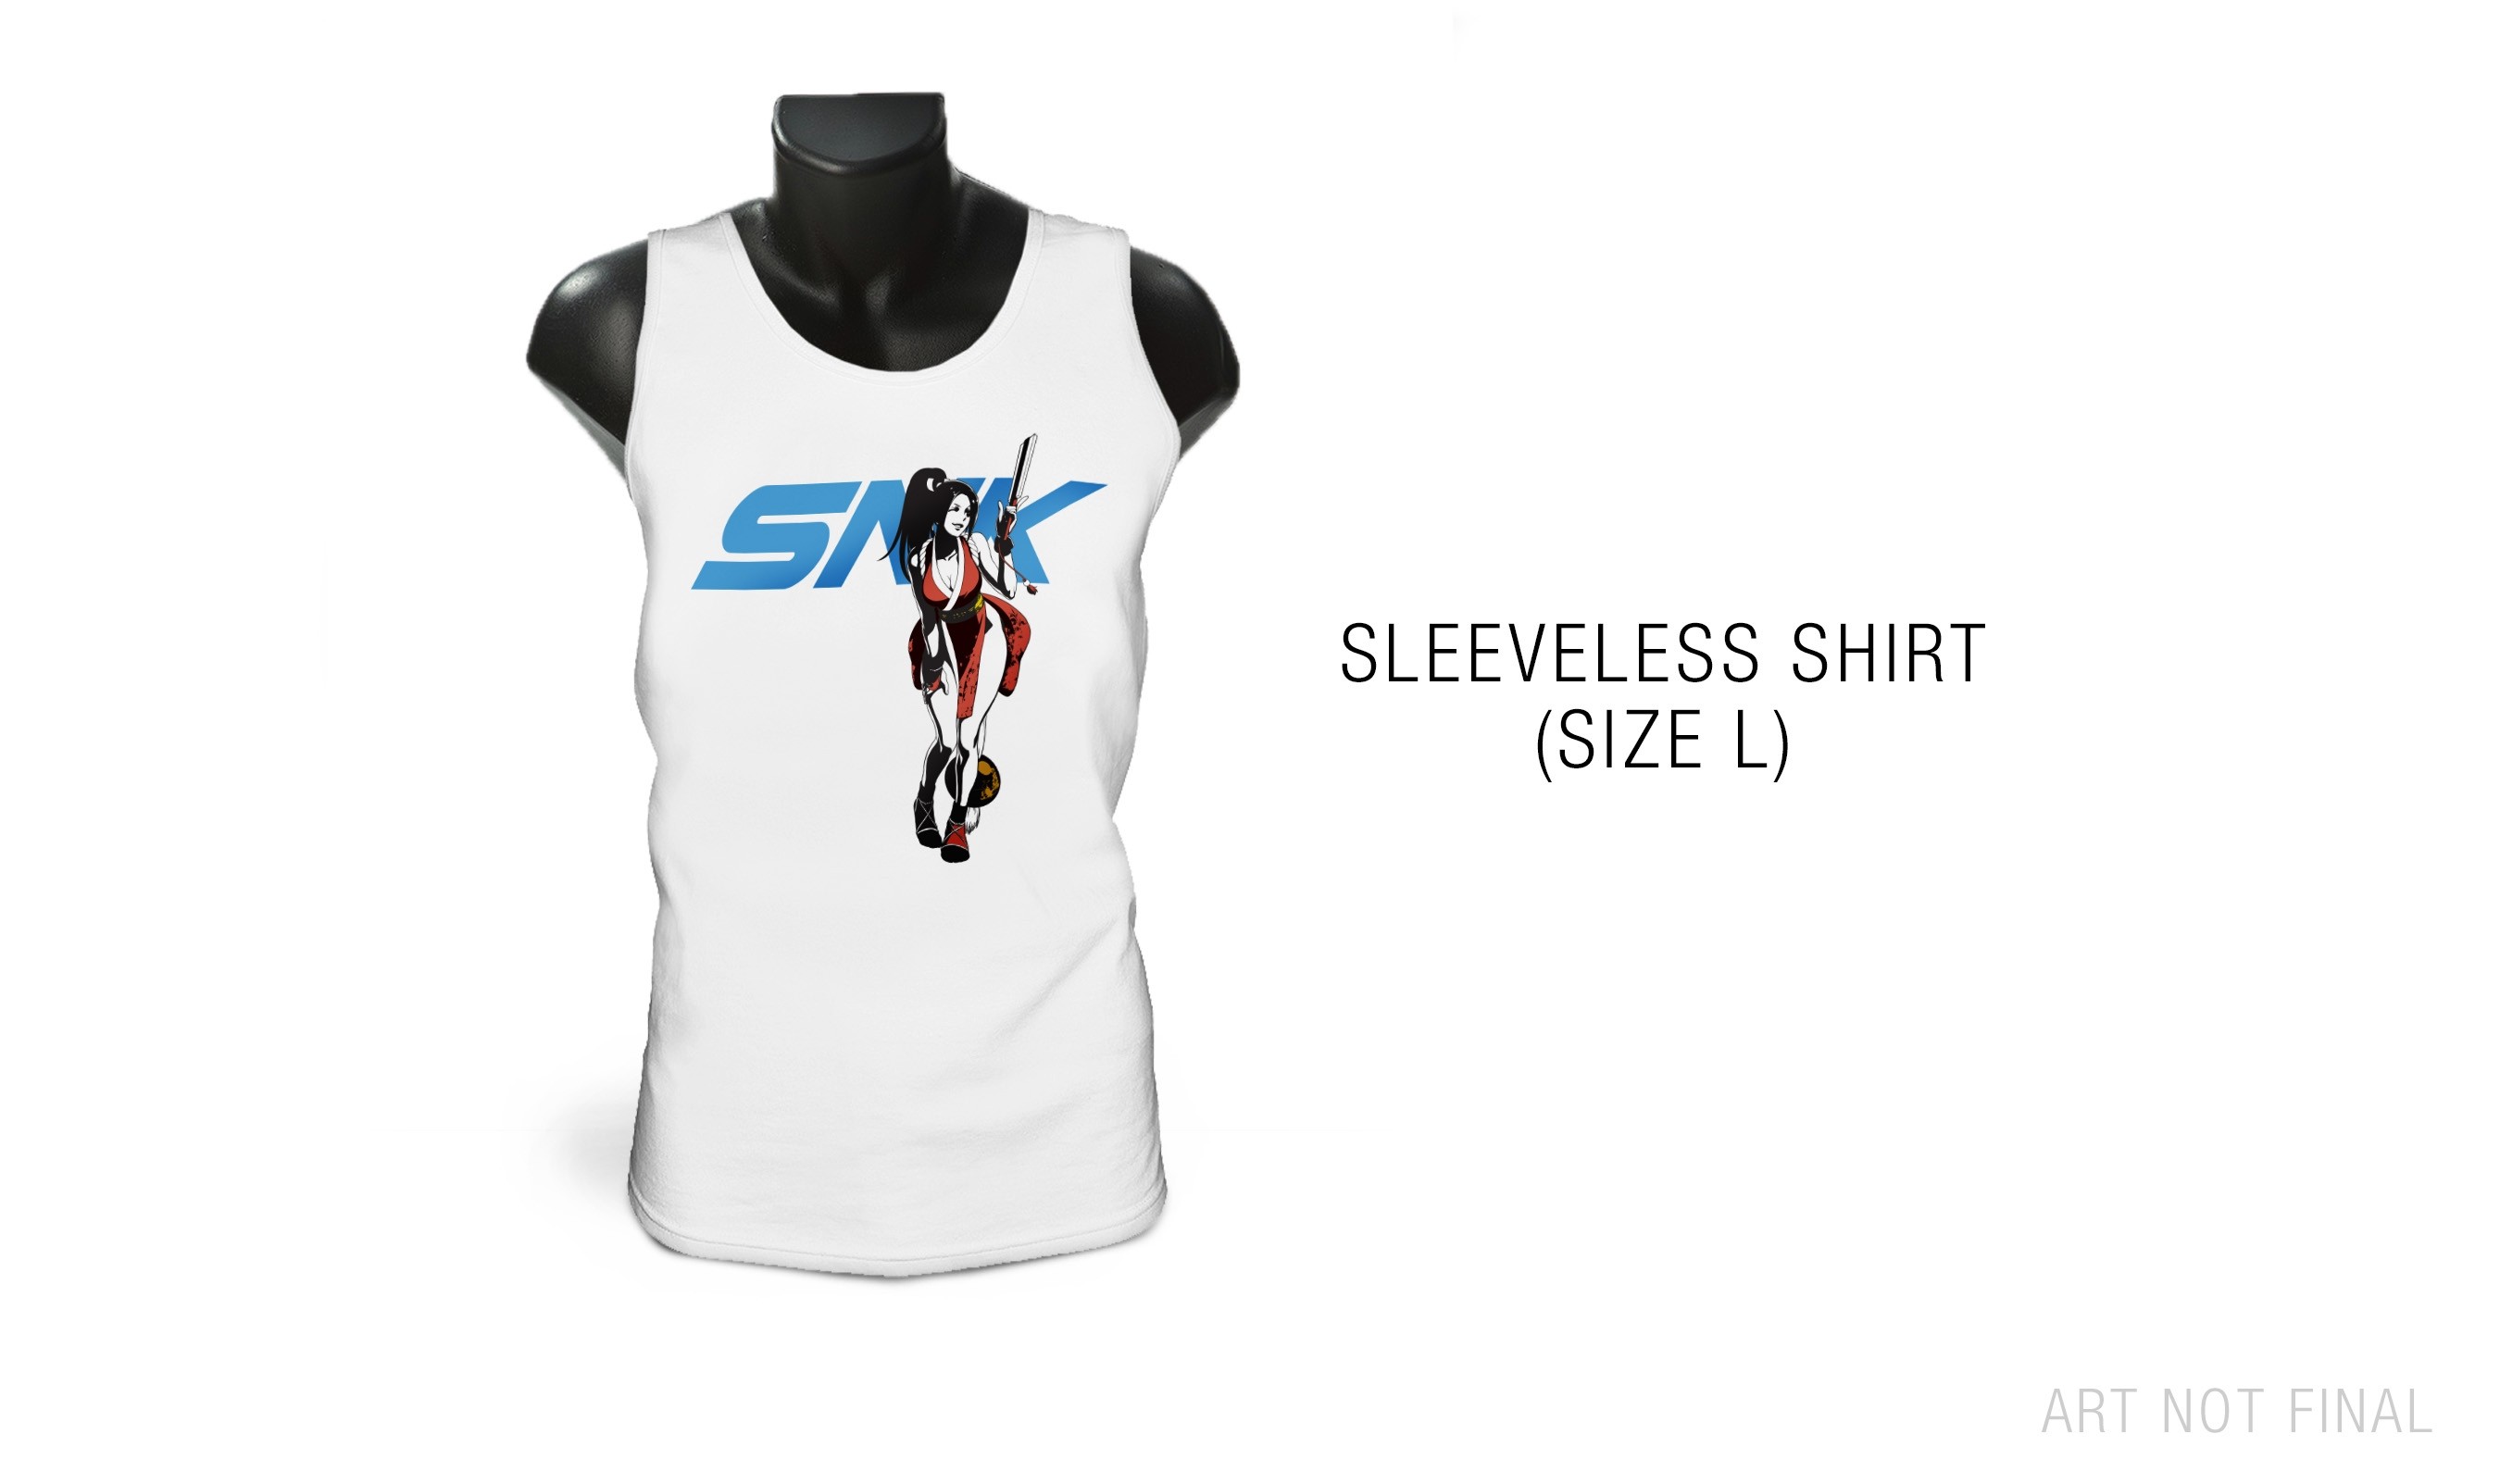 snk-heroines-tag-team-frenzy-sleeveless-shirt-photo